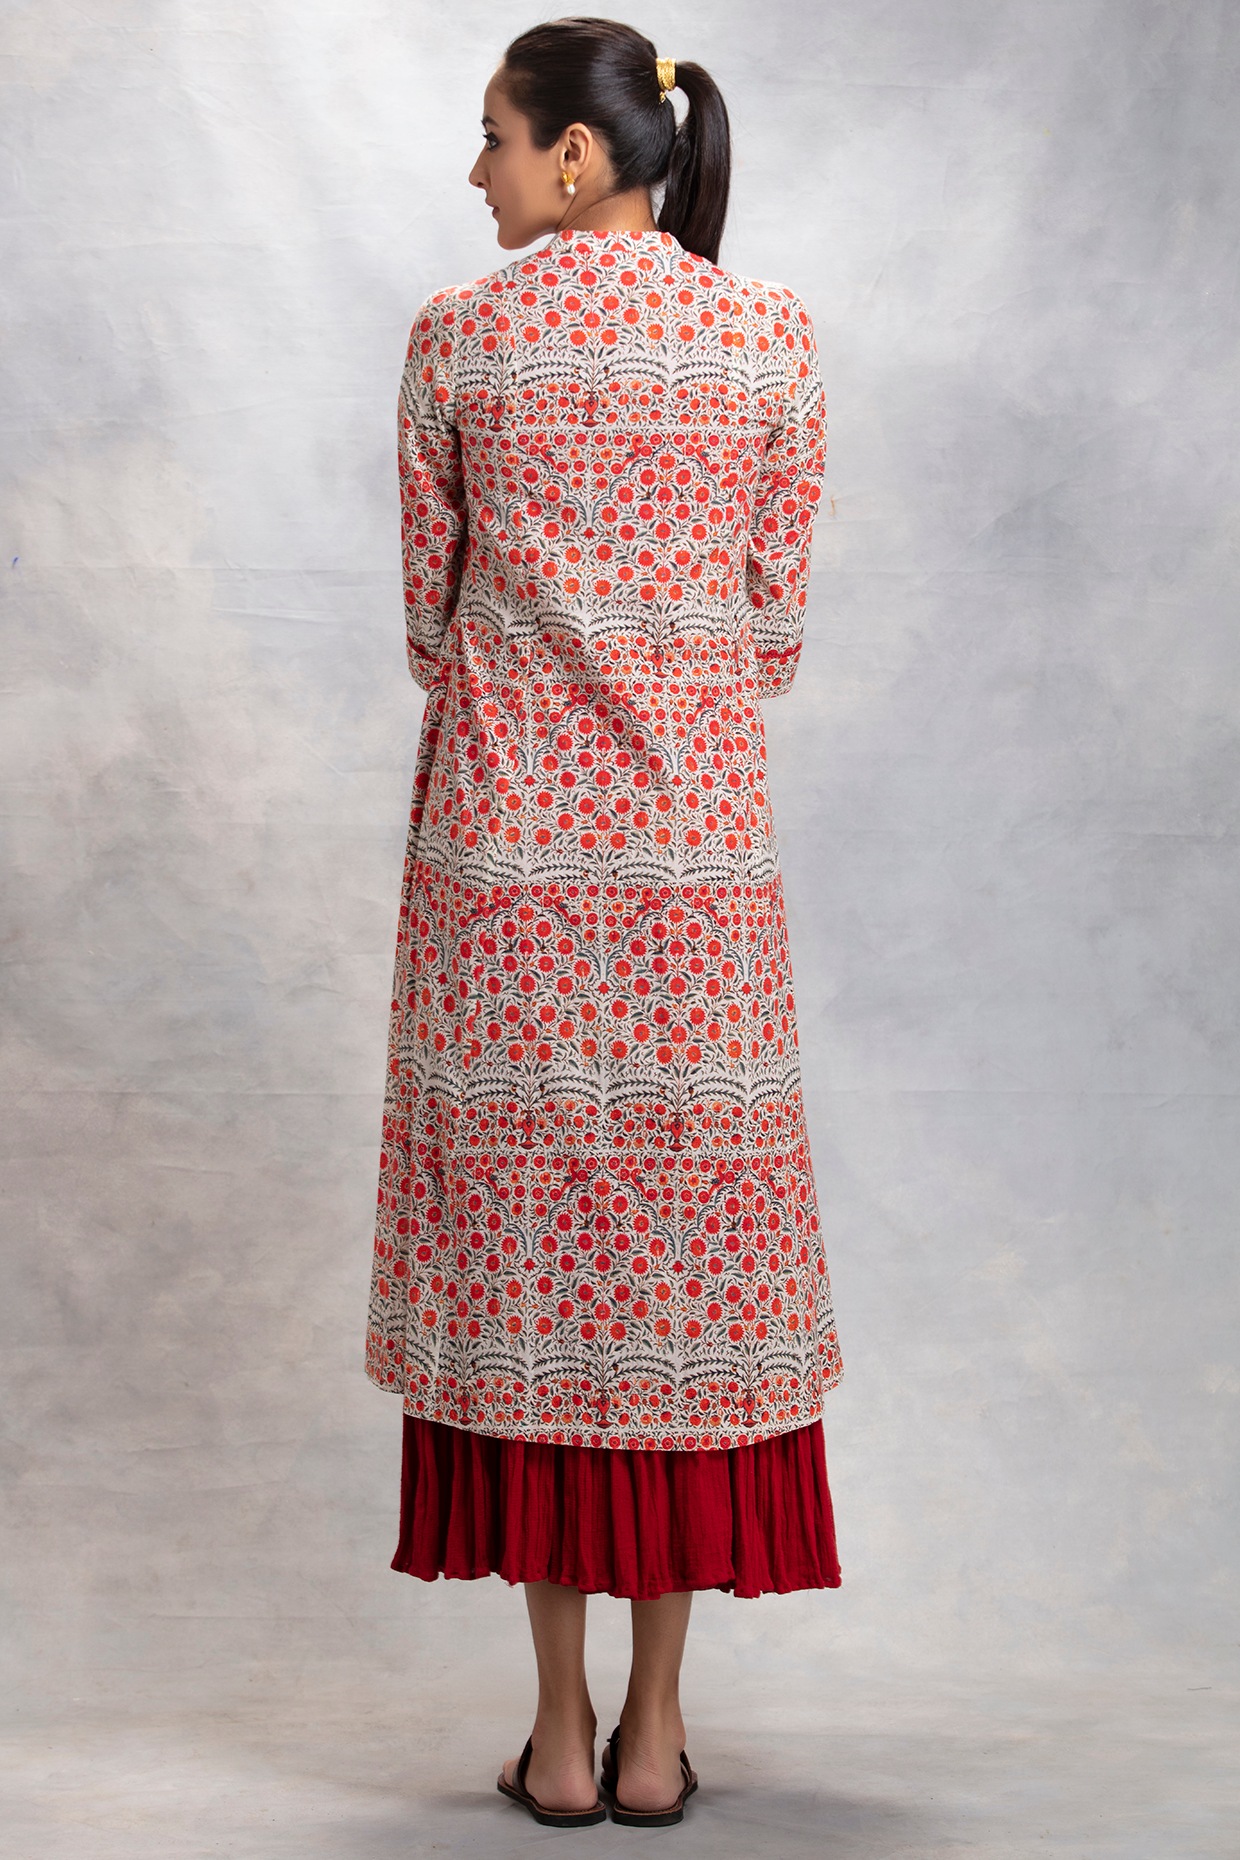 Buy Maharaja Men's Cotton Blend Nehru/Modi Jacket - Waist Coat for Men  [MSJ001-36] at Amazon.in